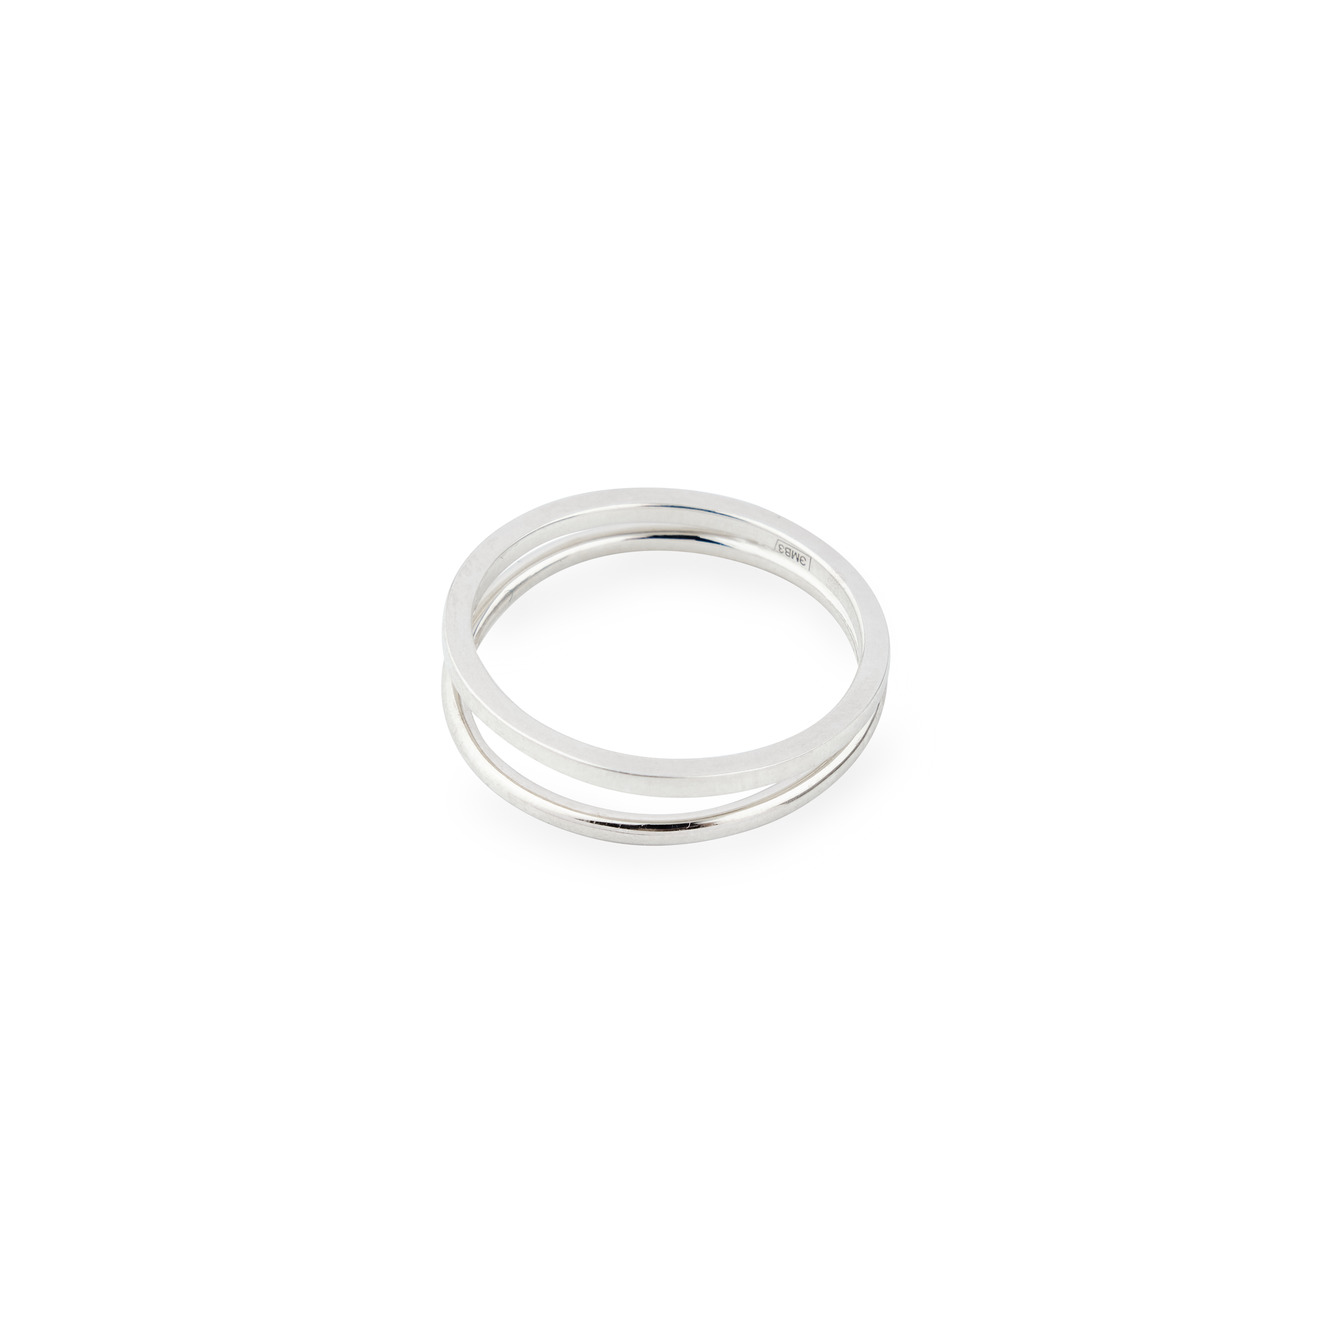 Ms. Marble Двойное кольцо из серебра Karma glenda lópez двойное кольцо в виде труб из серебра